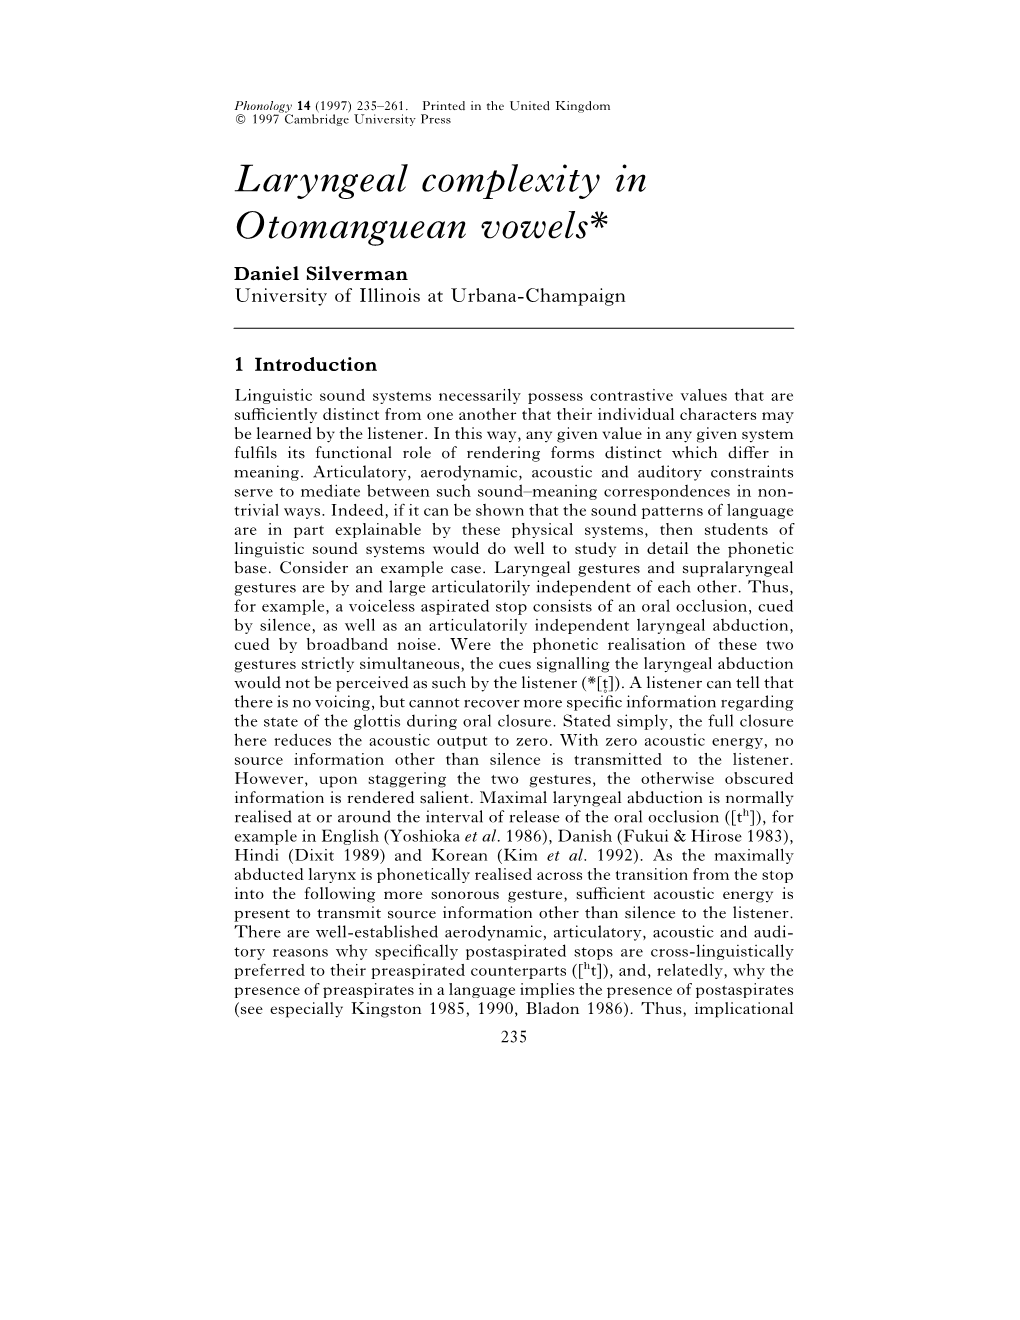 (1997). “Laryngeal Complexity in Otomanguean Vowels,”